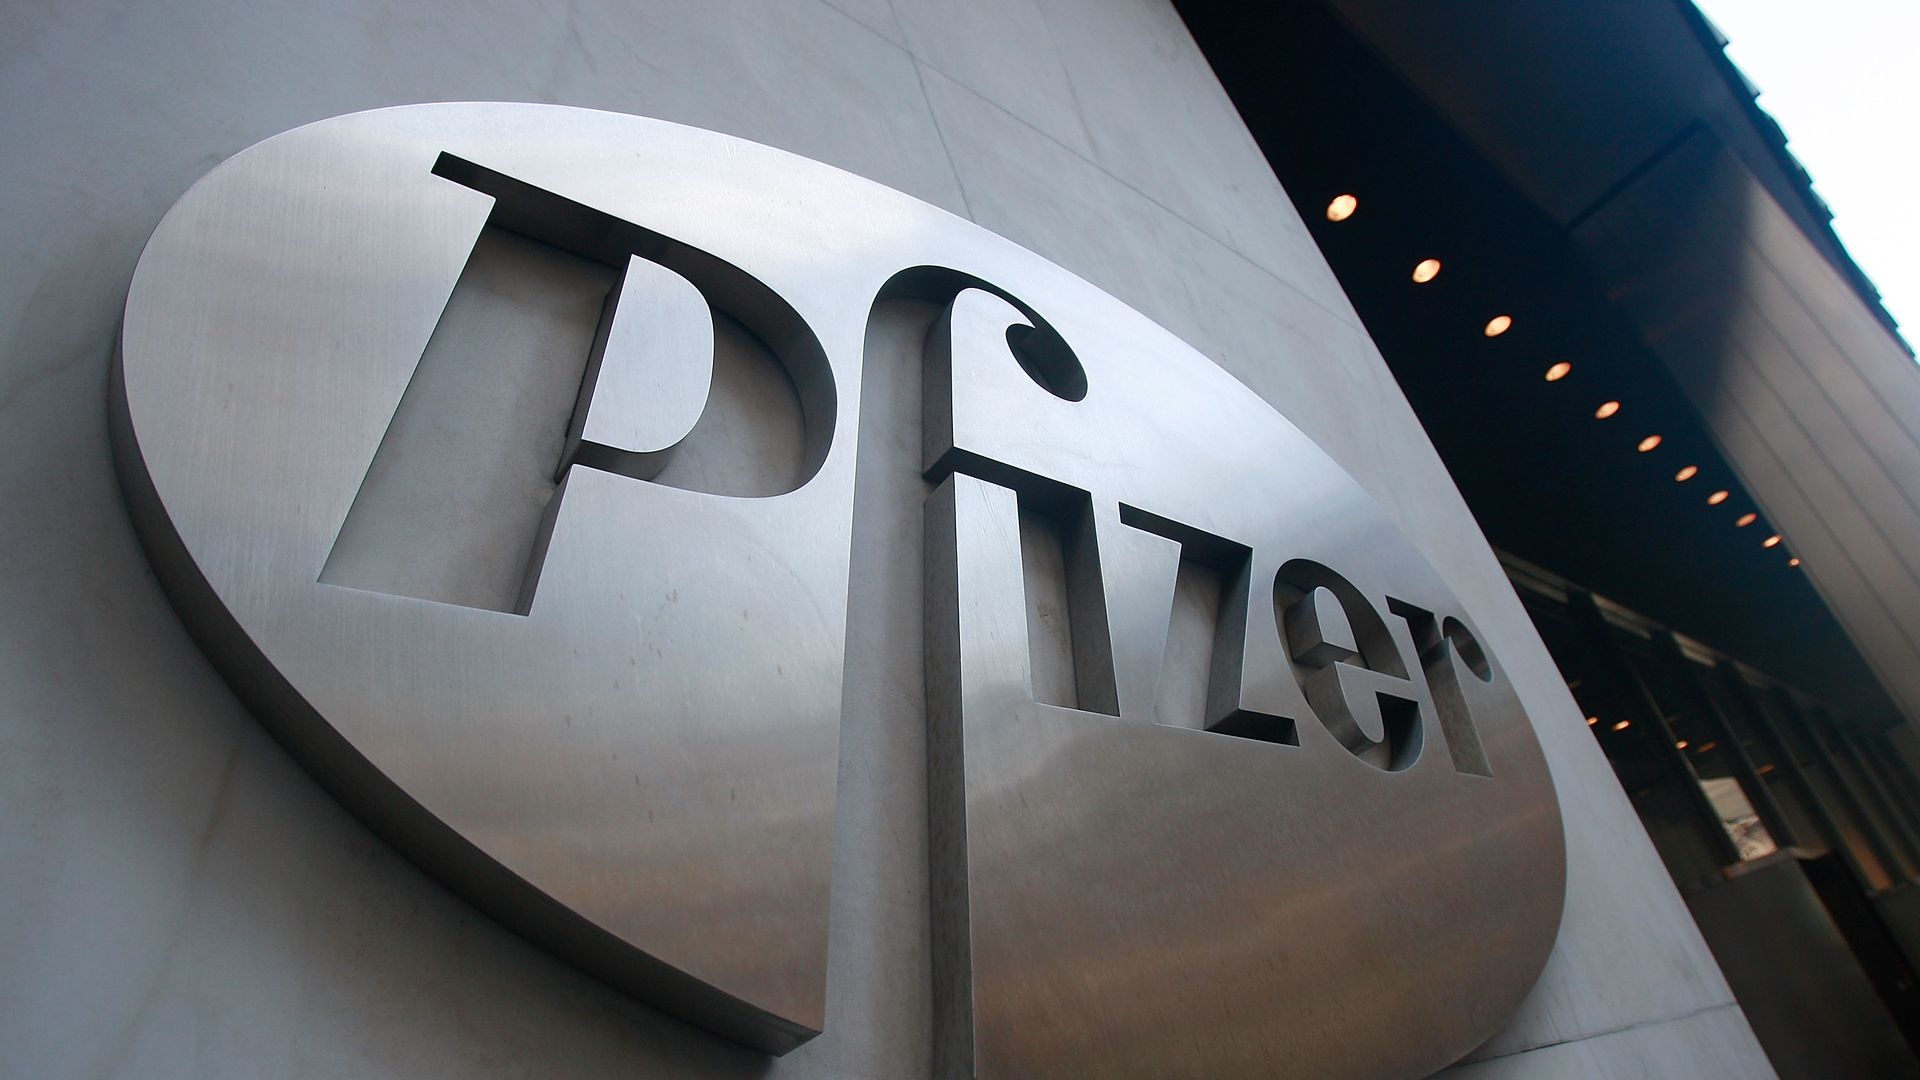 Pfizer's logo.